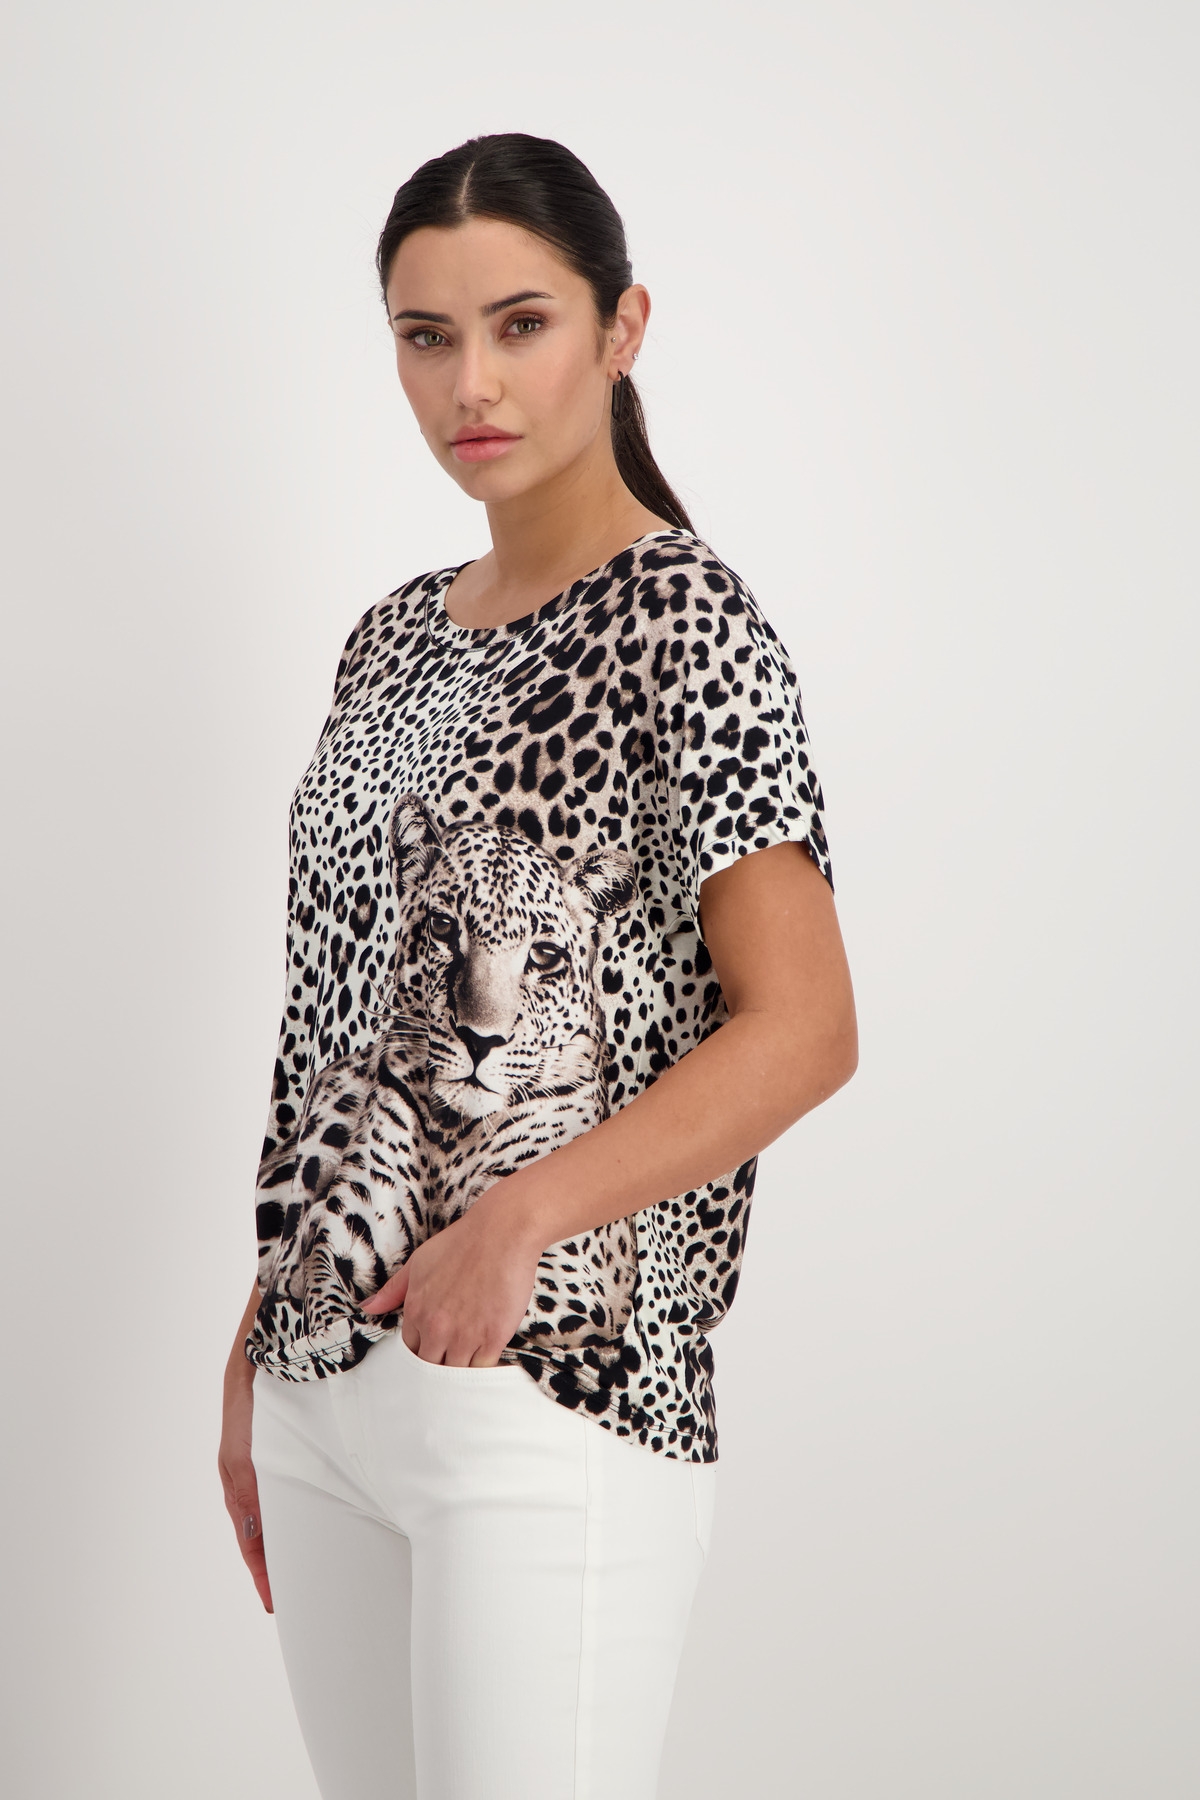 MONARI Leoparden T-Shirt 10763707